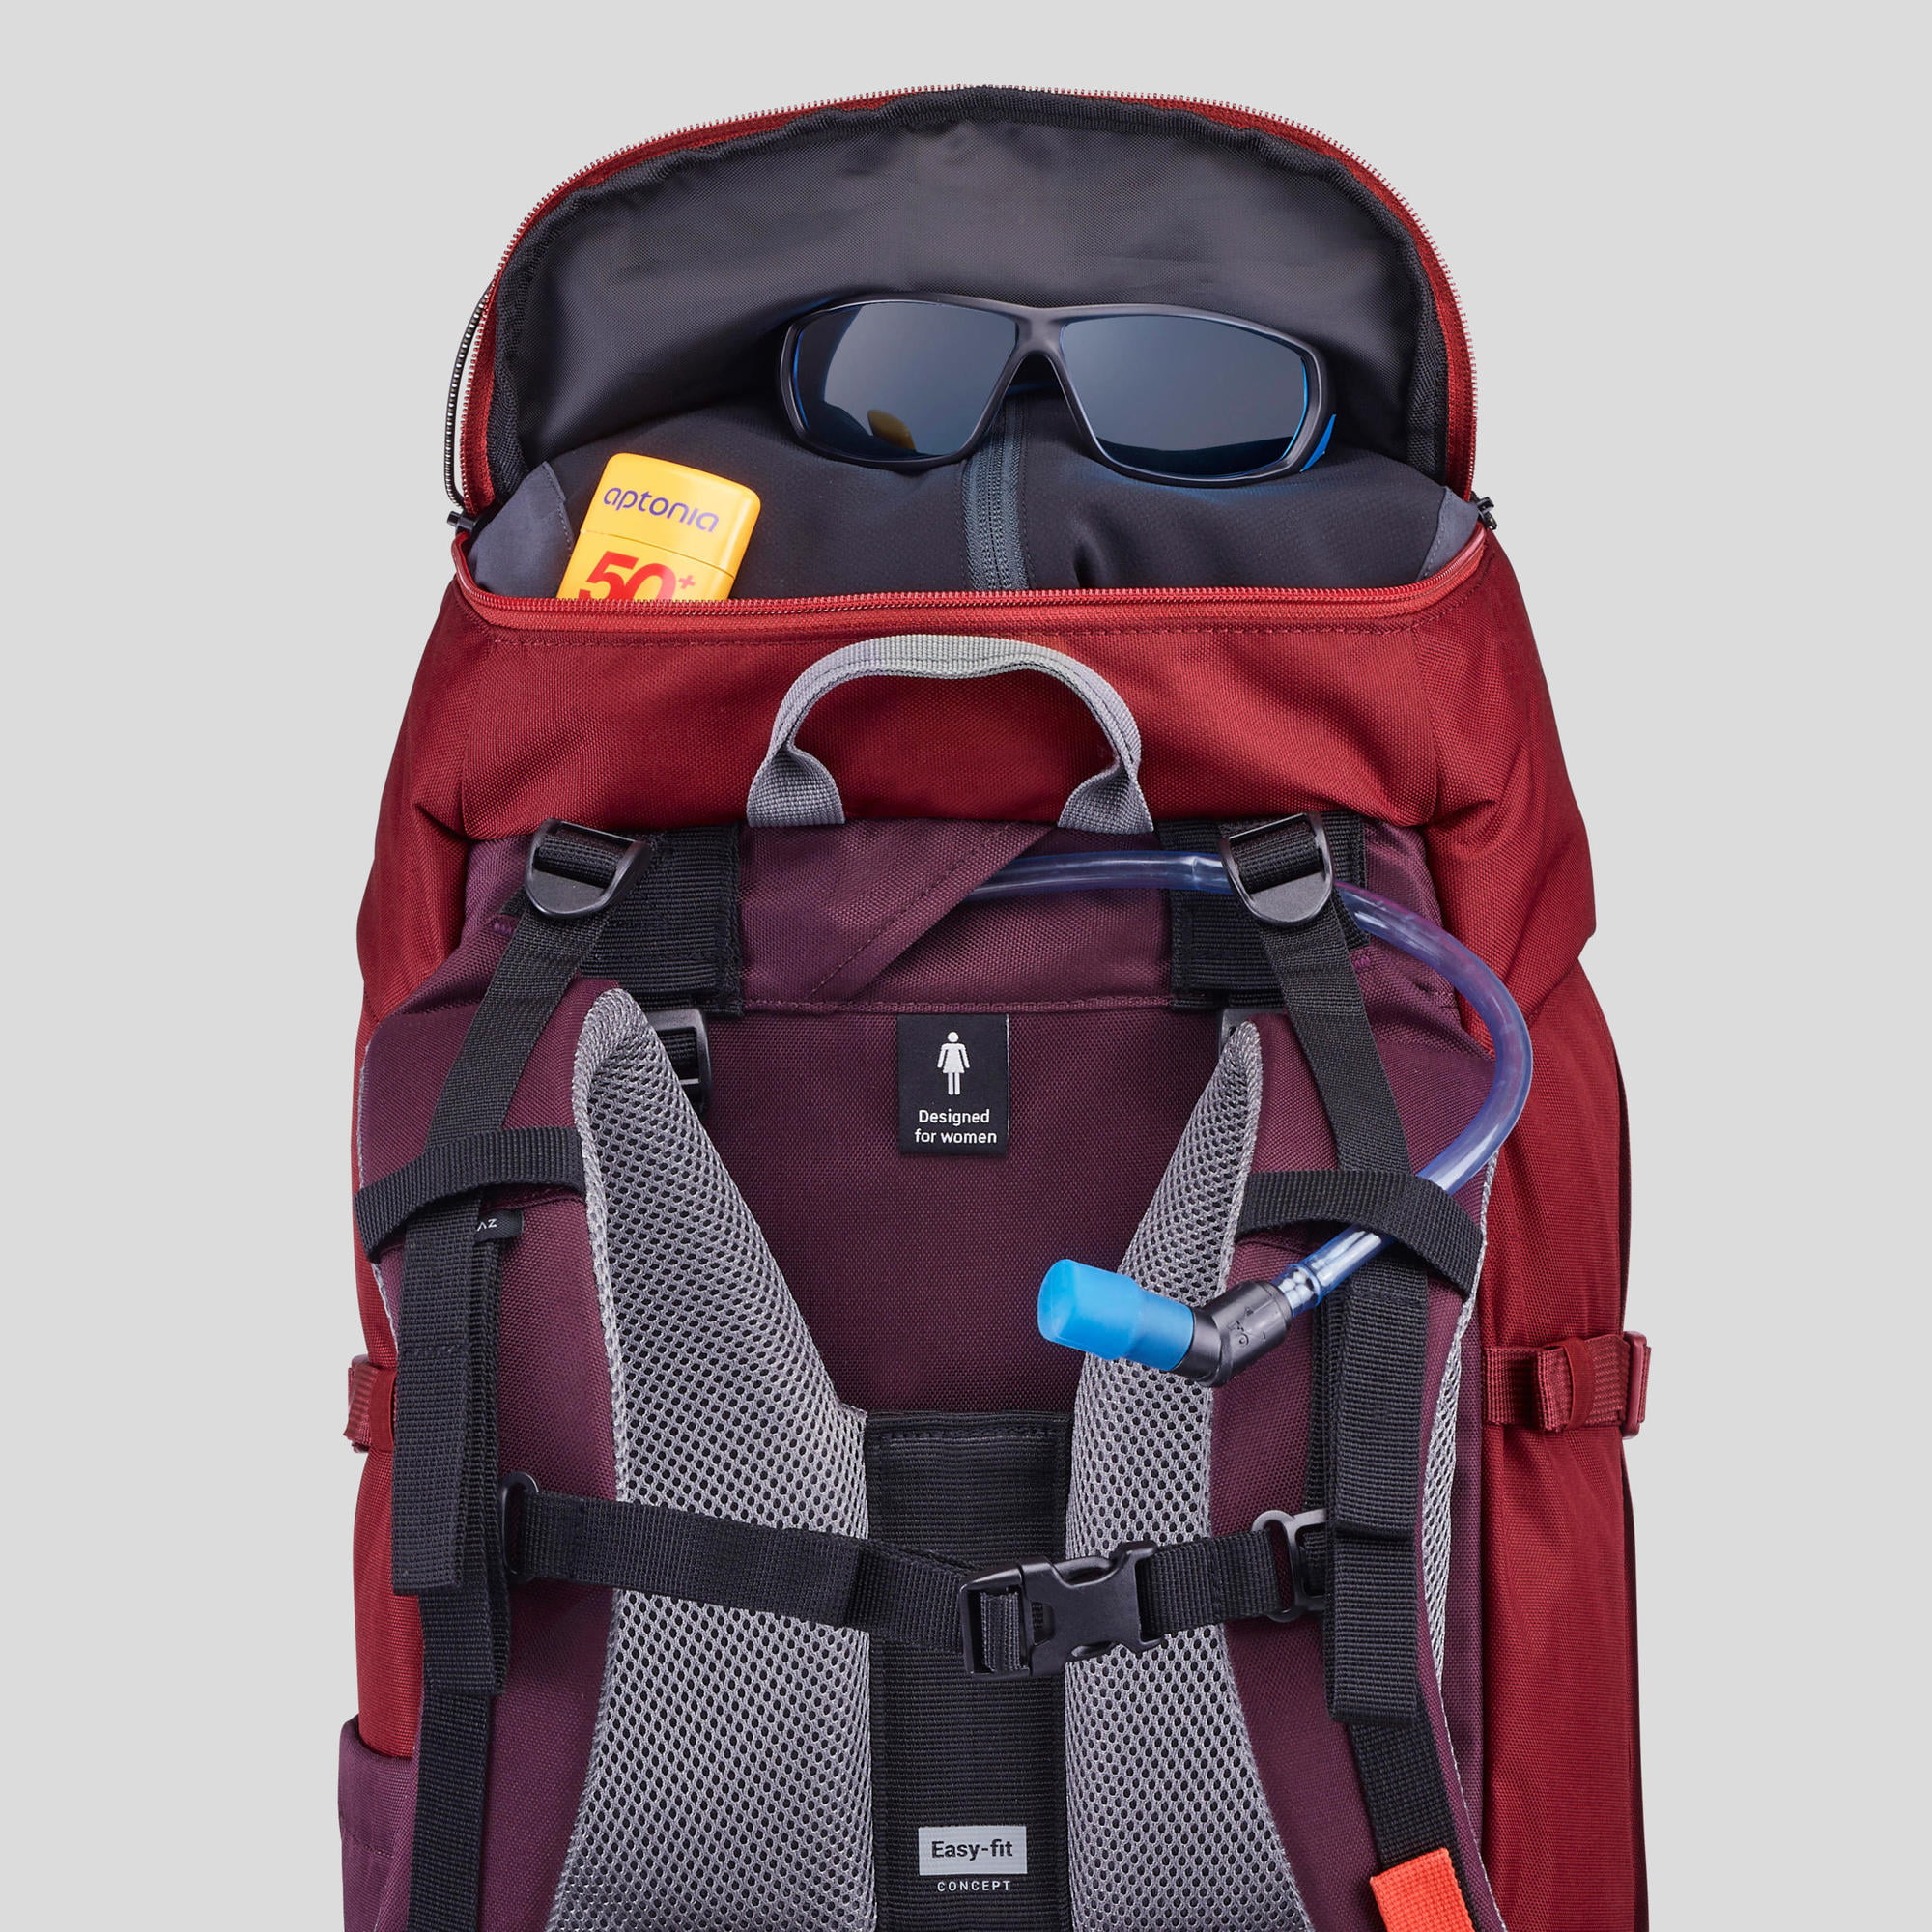 Decathlon - Forclaz Trek 100 Easyfit, 50 L Hiking Backpack, Men's 